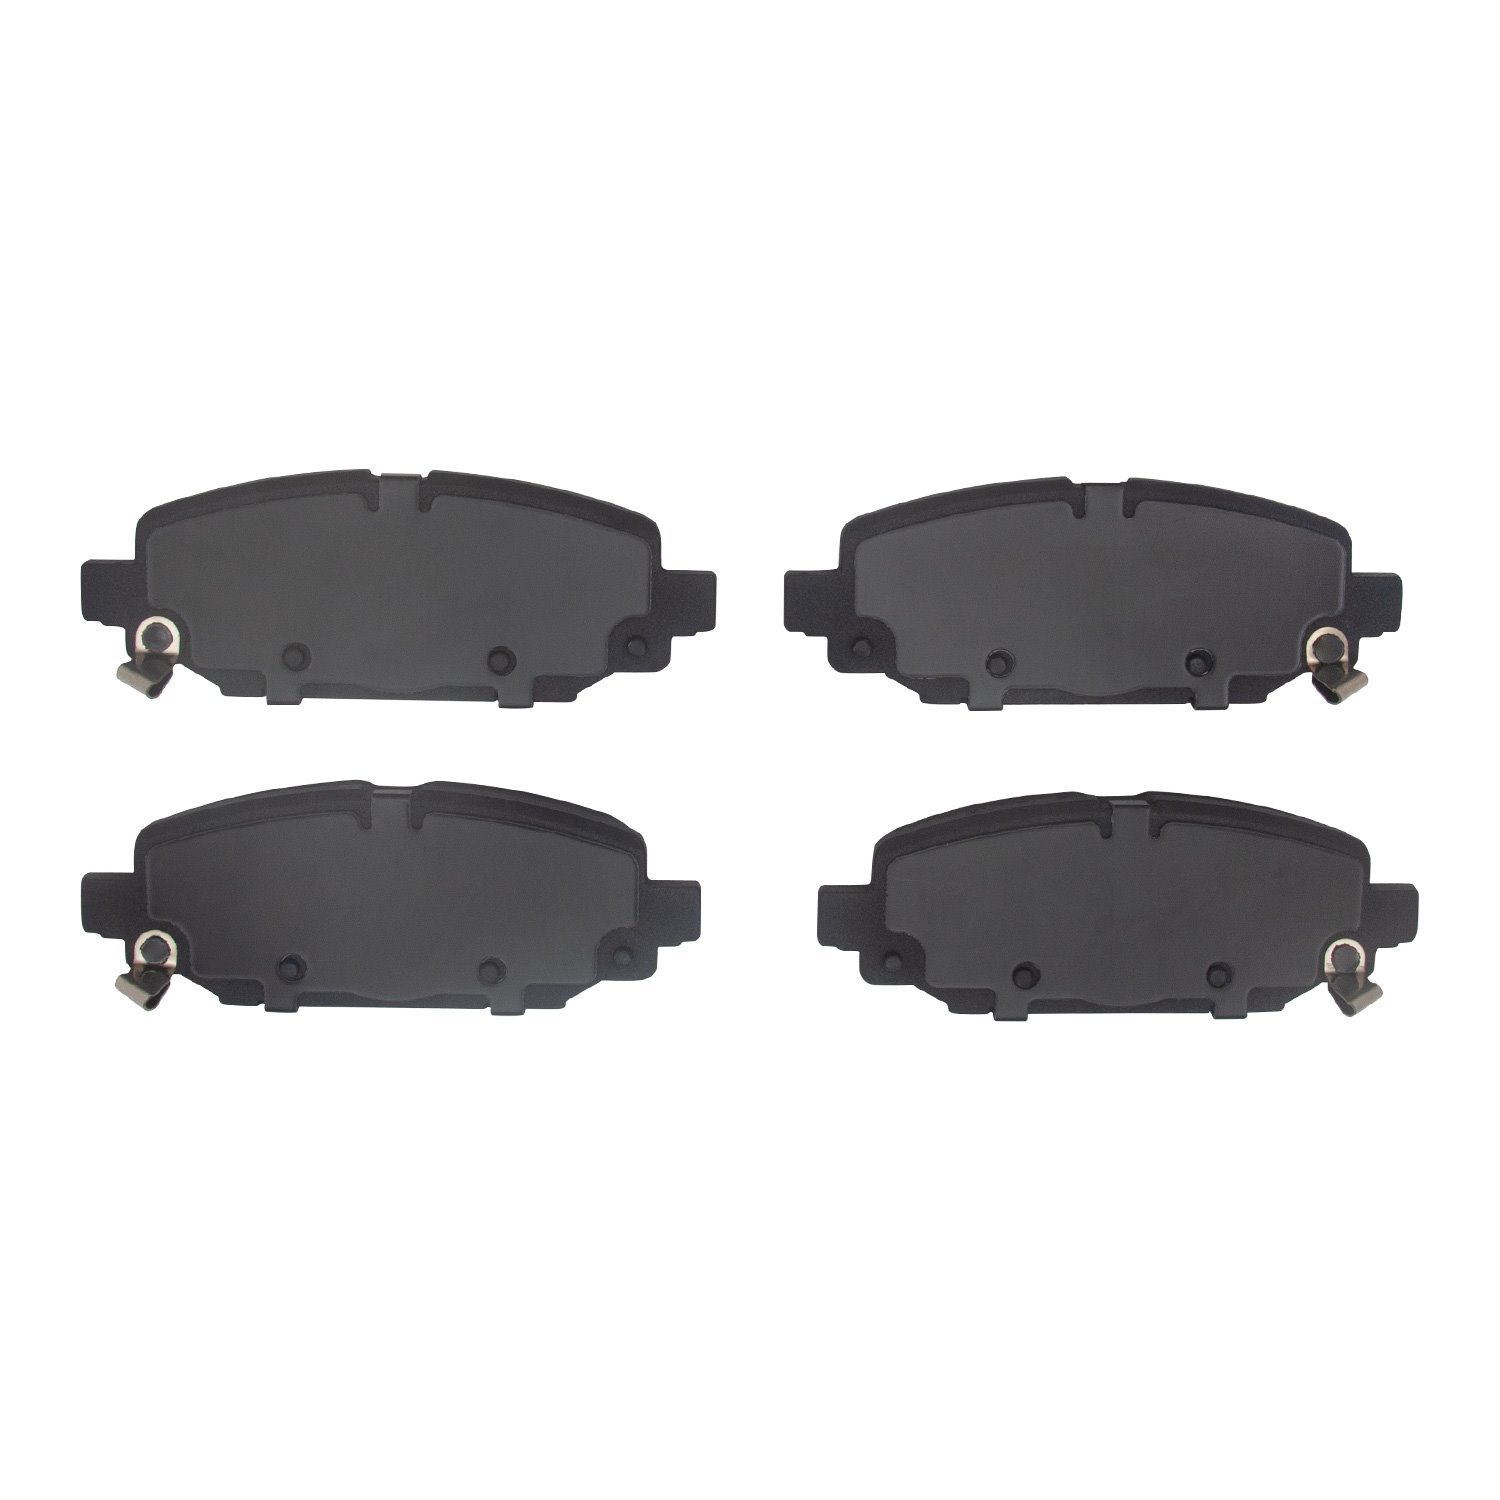 1551-2172-00 5000 Advanced Ceramic Brake Pads, Fits Select Mopar, Position: Rear